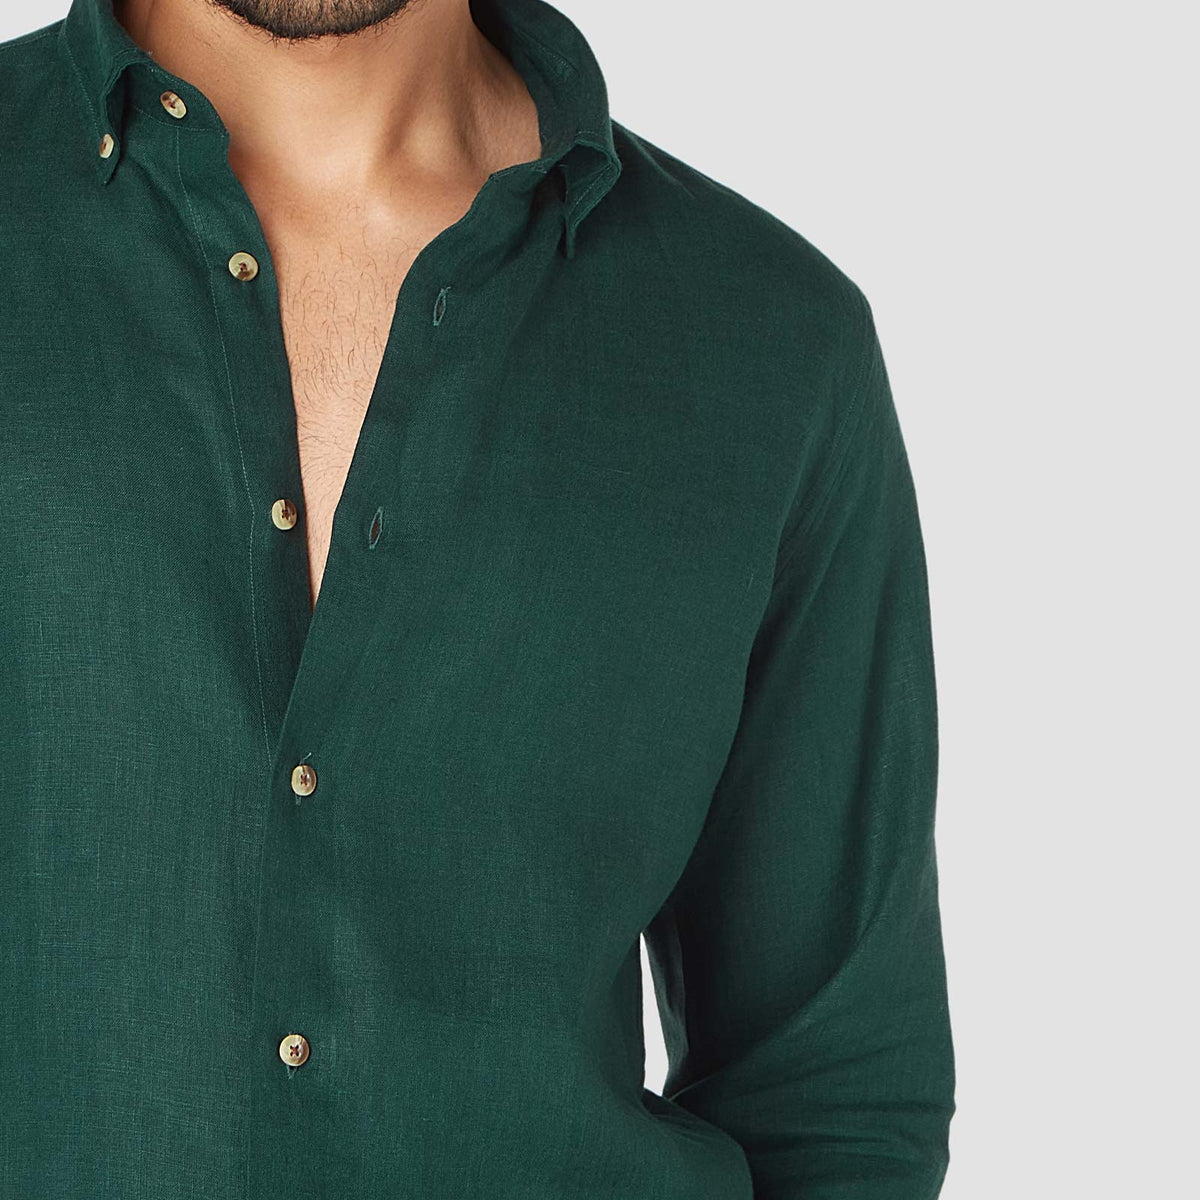 Men's Dress Shirt Fit Guide & Size Chart – Bombay Shirt Company